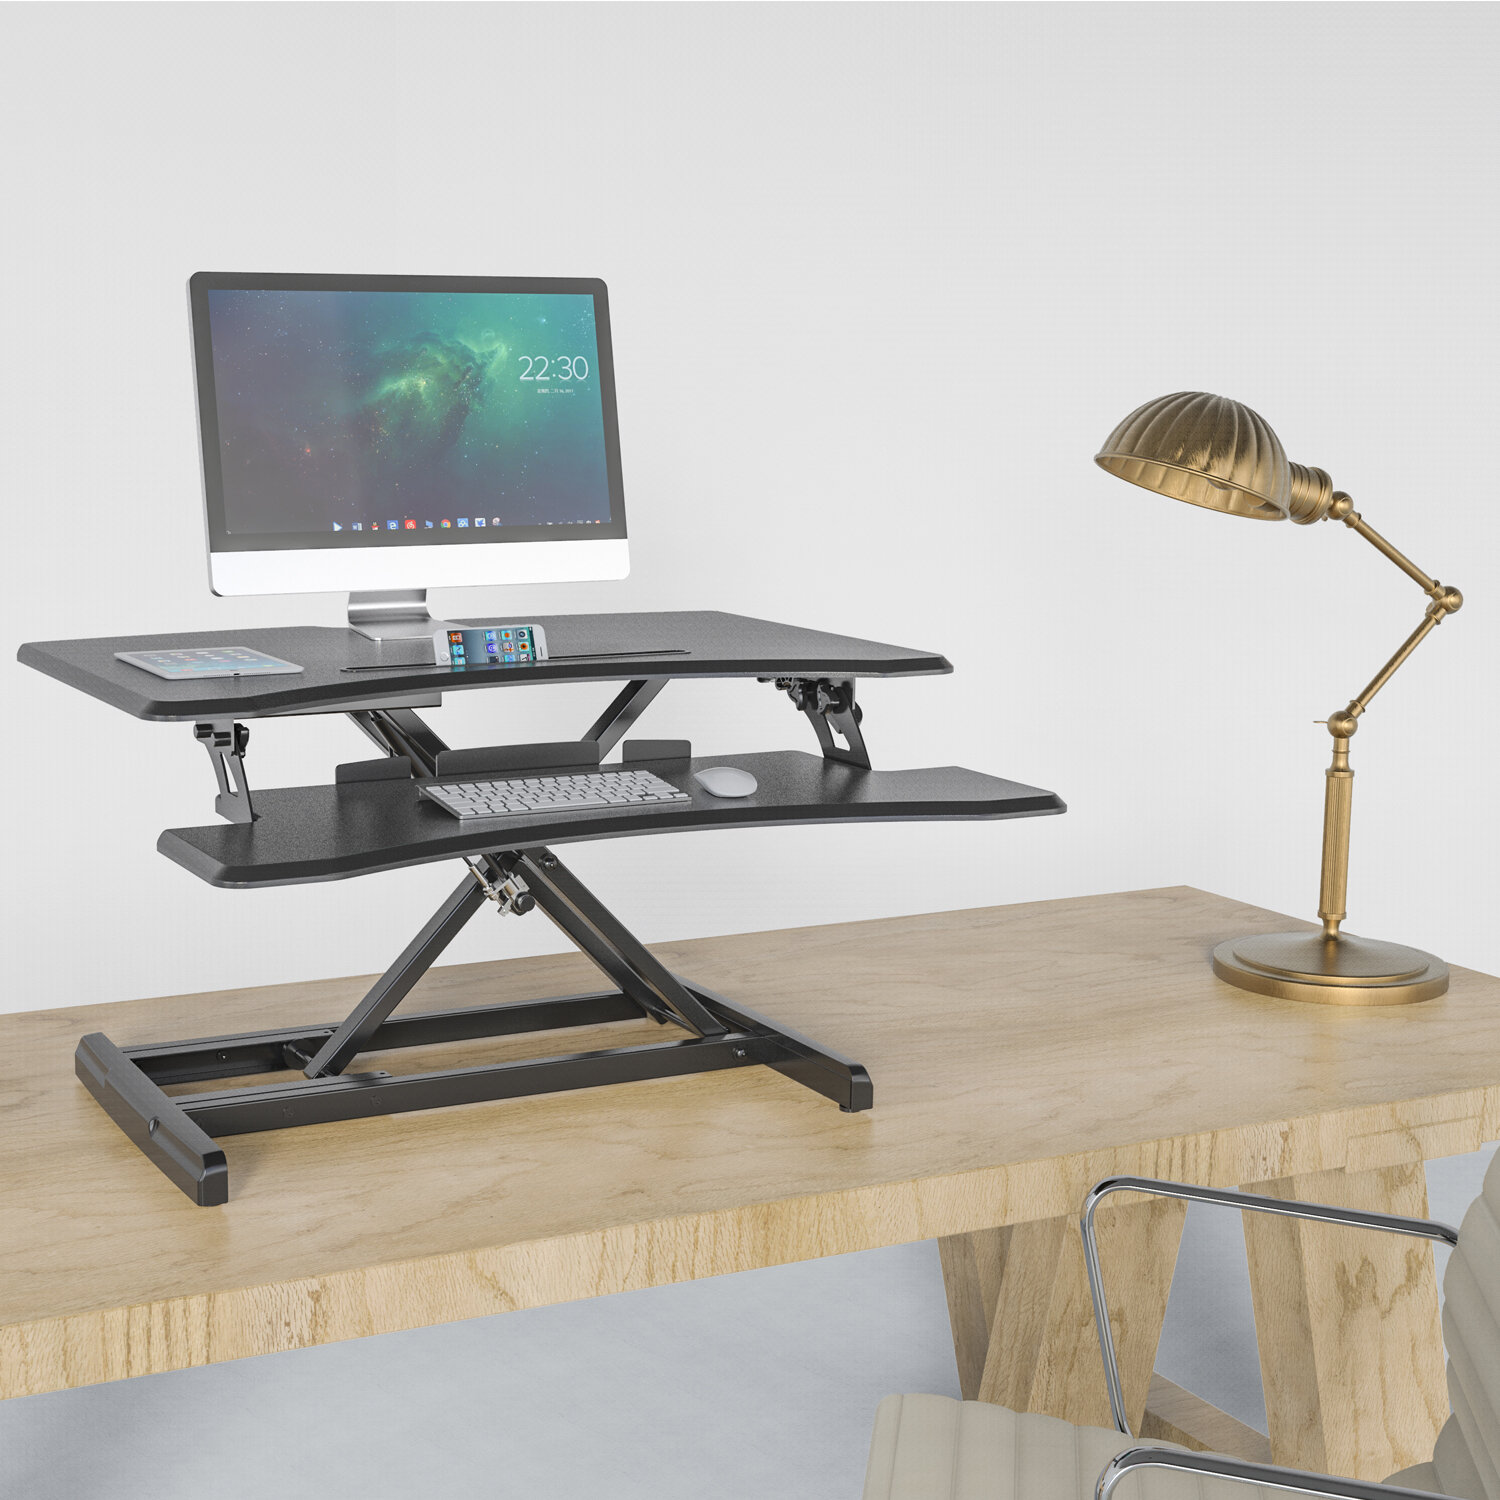 Symple Stuff Spires Height Adjustable Standing Desk Converter